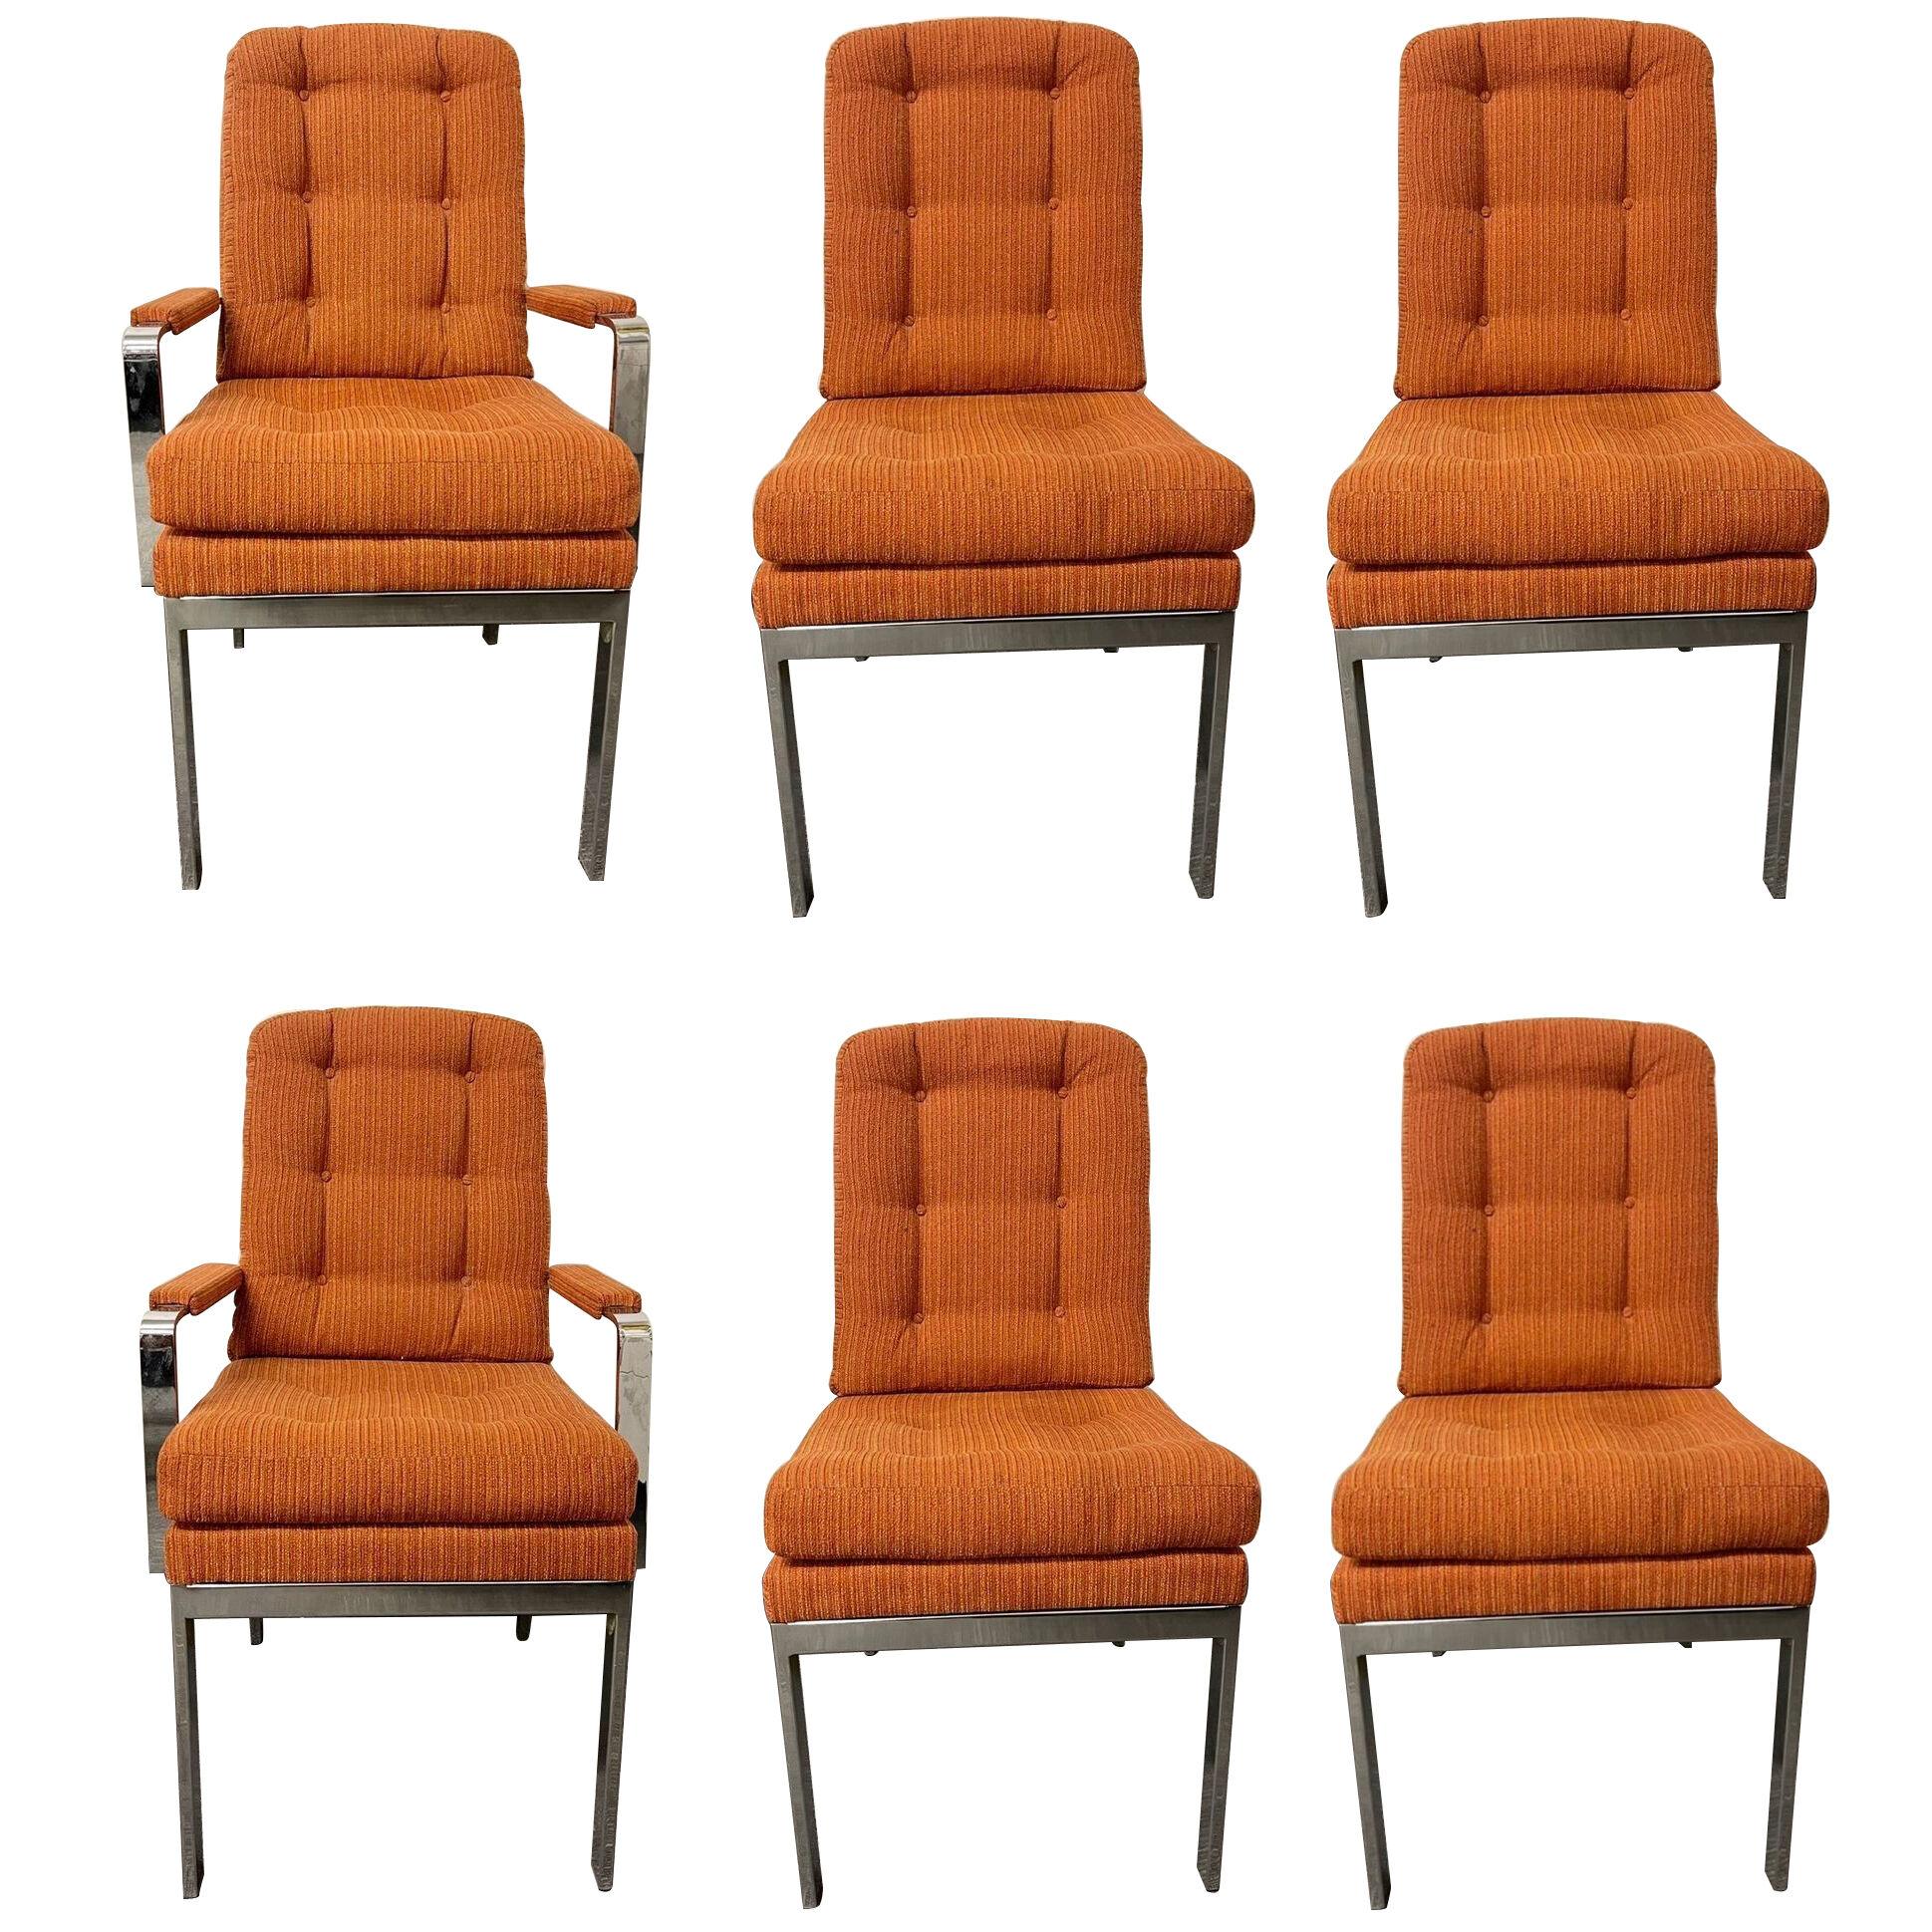 6 Chrome Base Milo Baughman Style Dining Chairs, Mid Century Modern